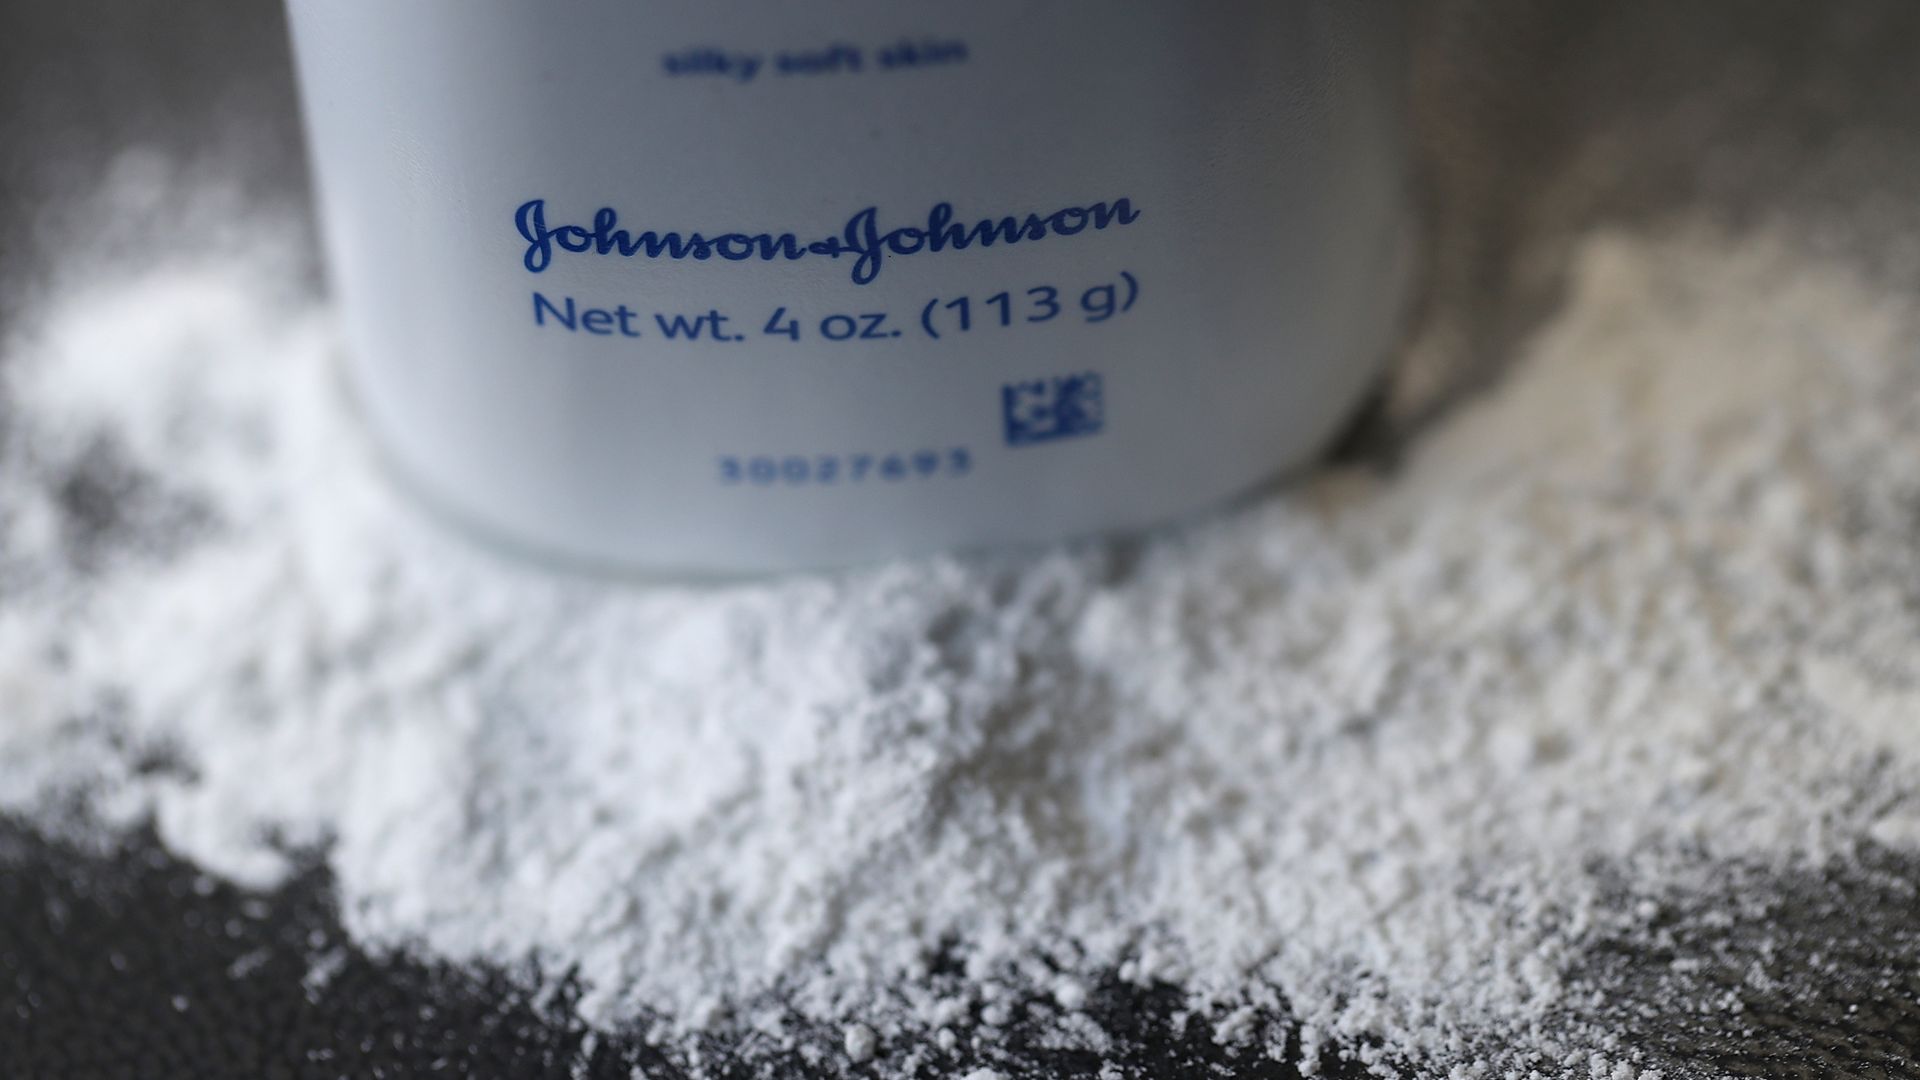 Johnson & Johnson baby powder and bottle.